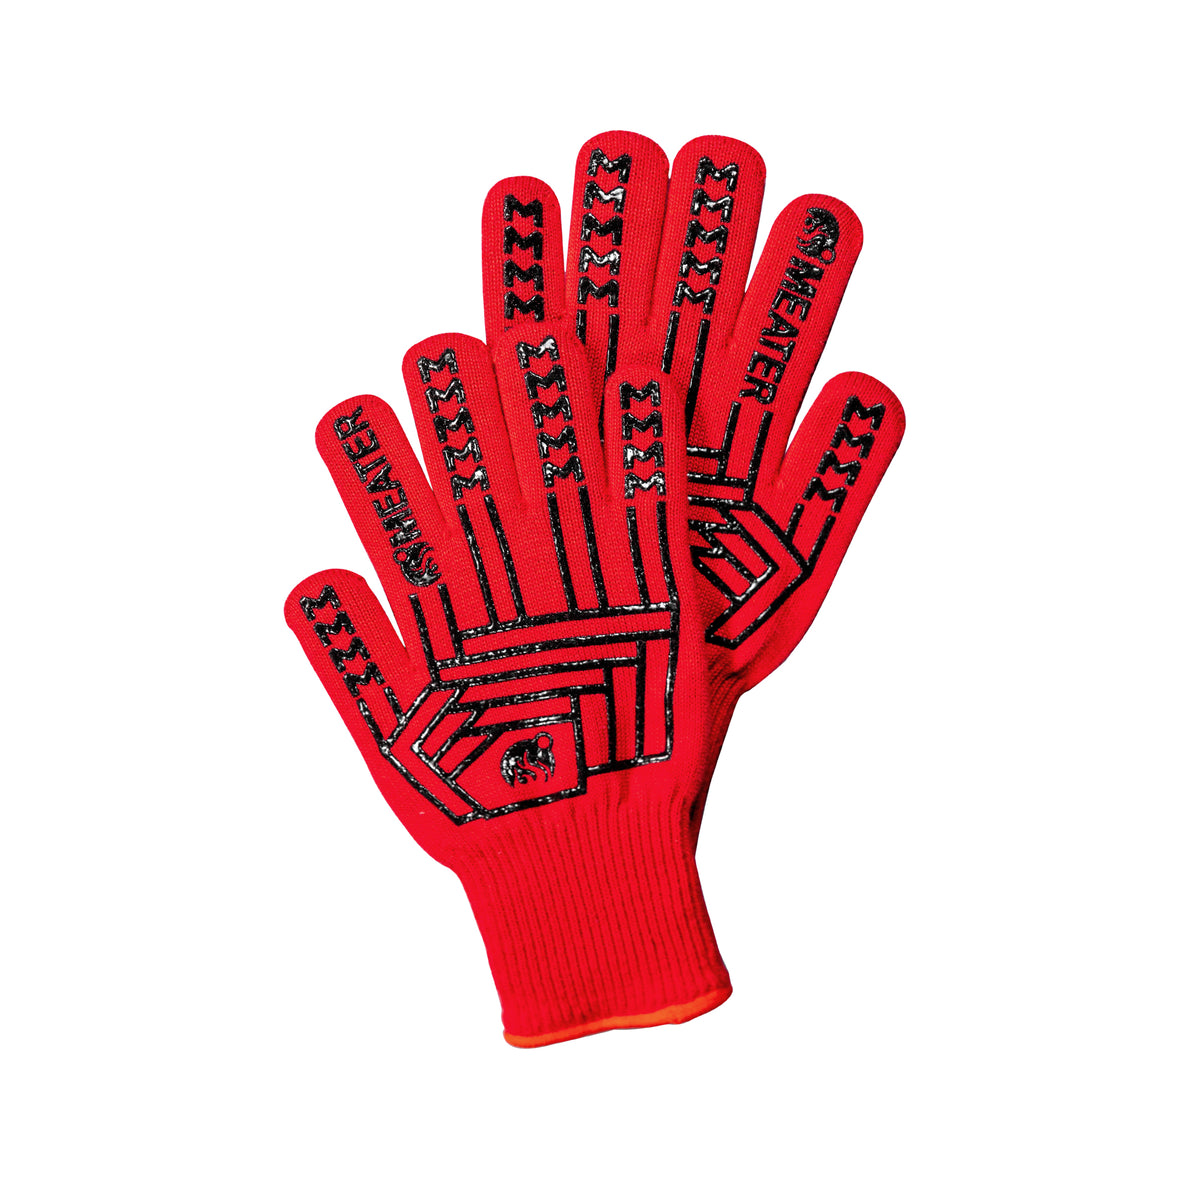 Buy Heat Resistant Gloves